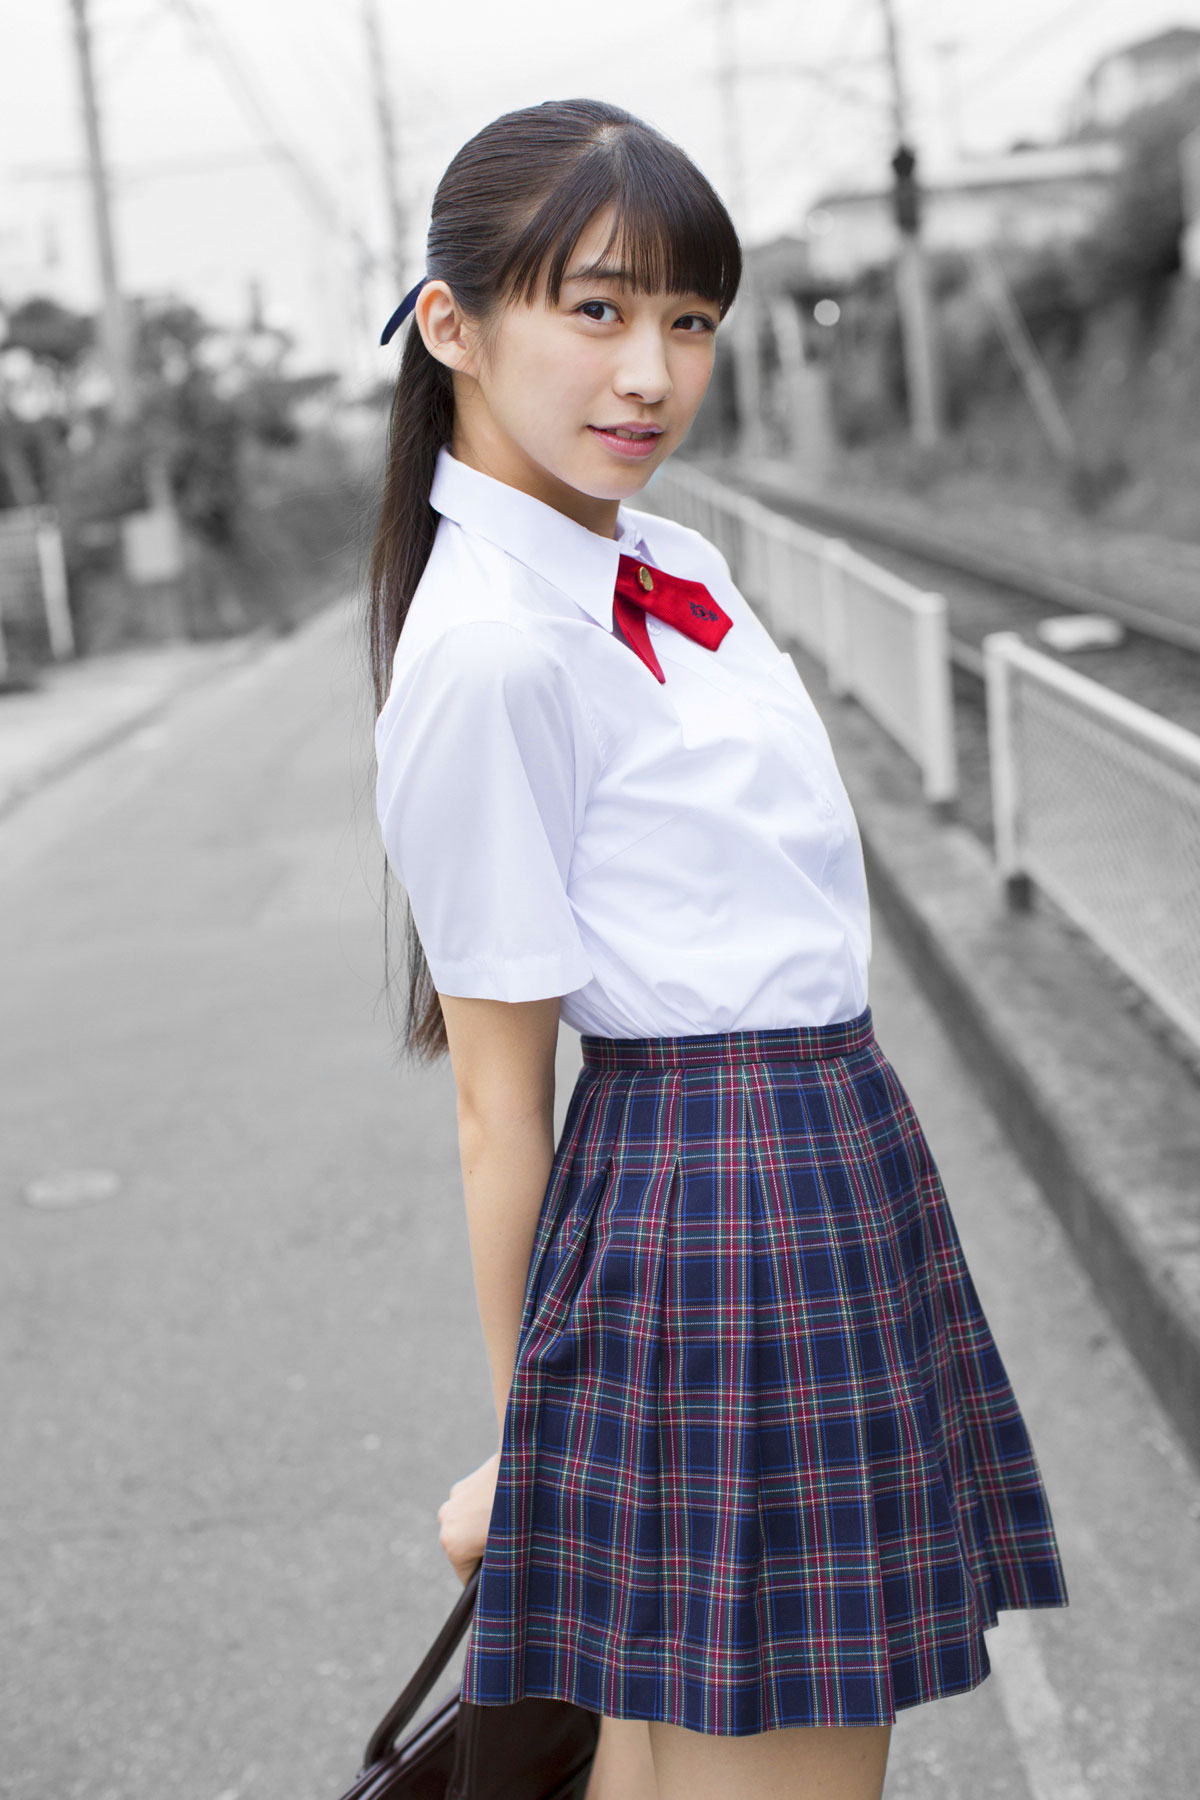 Tiny japanese schoolgirl uniform sixtynine